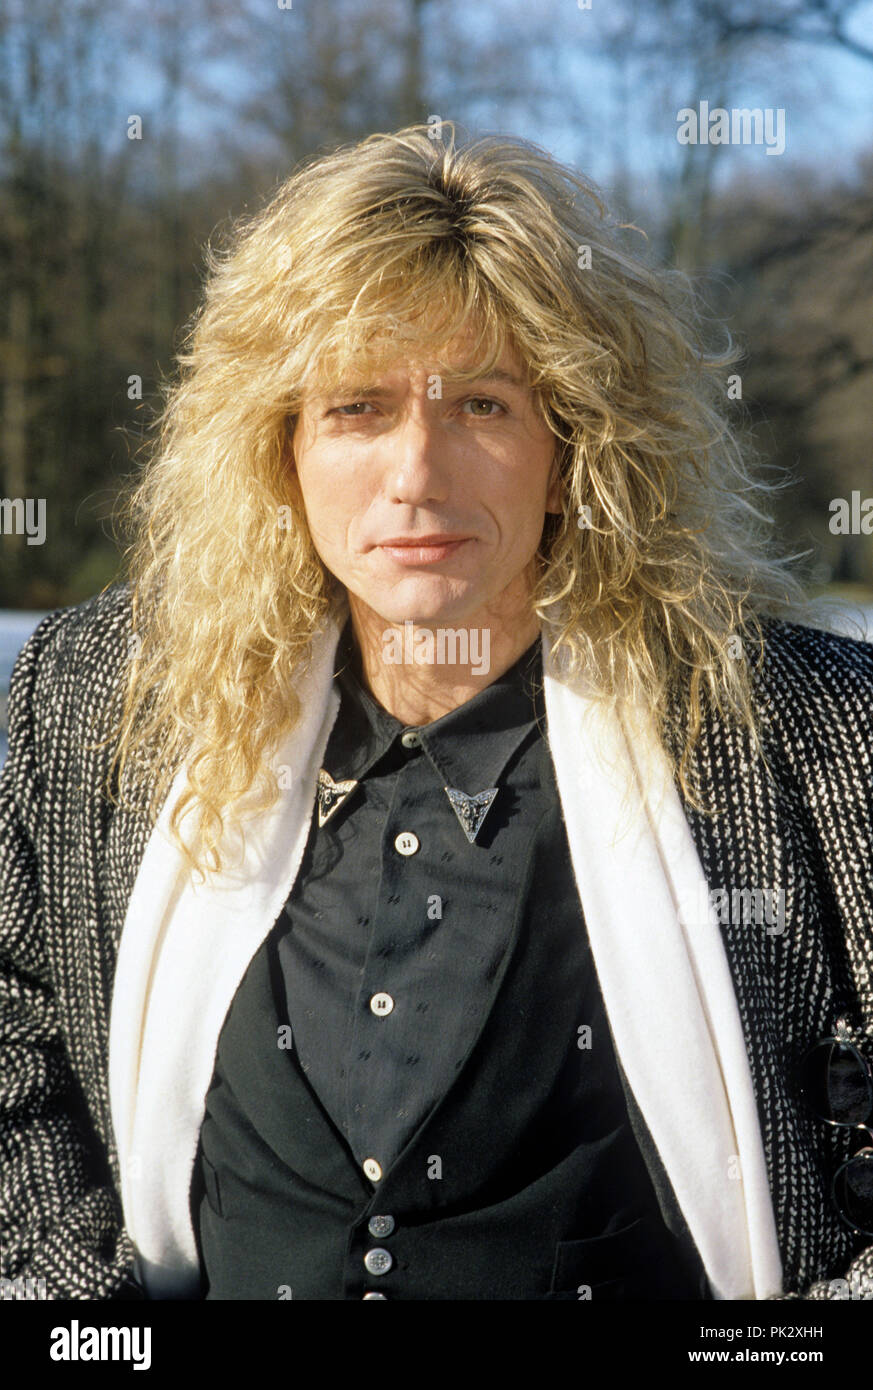 David Coverdale on 24.11.1989 in München / Munich. | usage worldwide Stock Photo